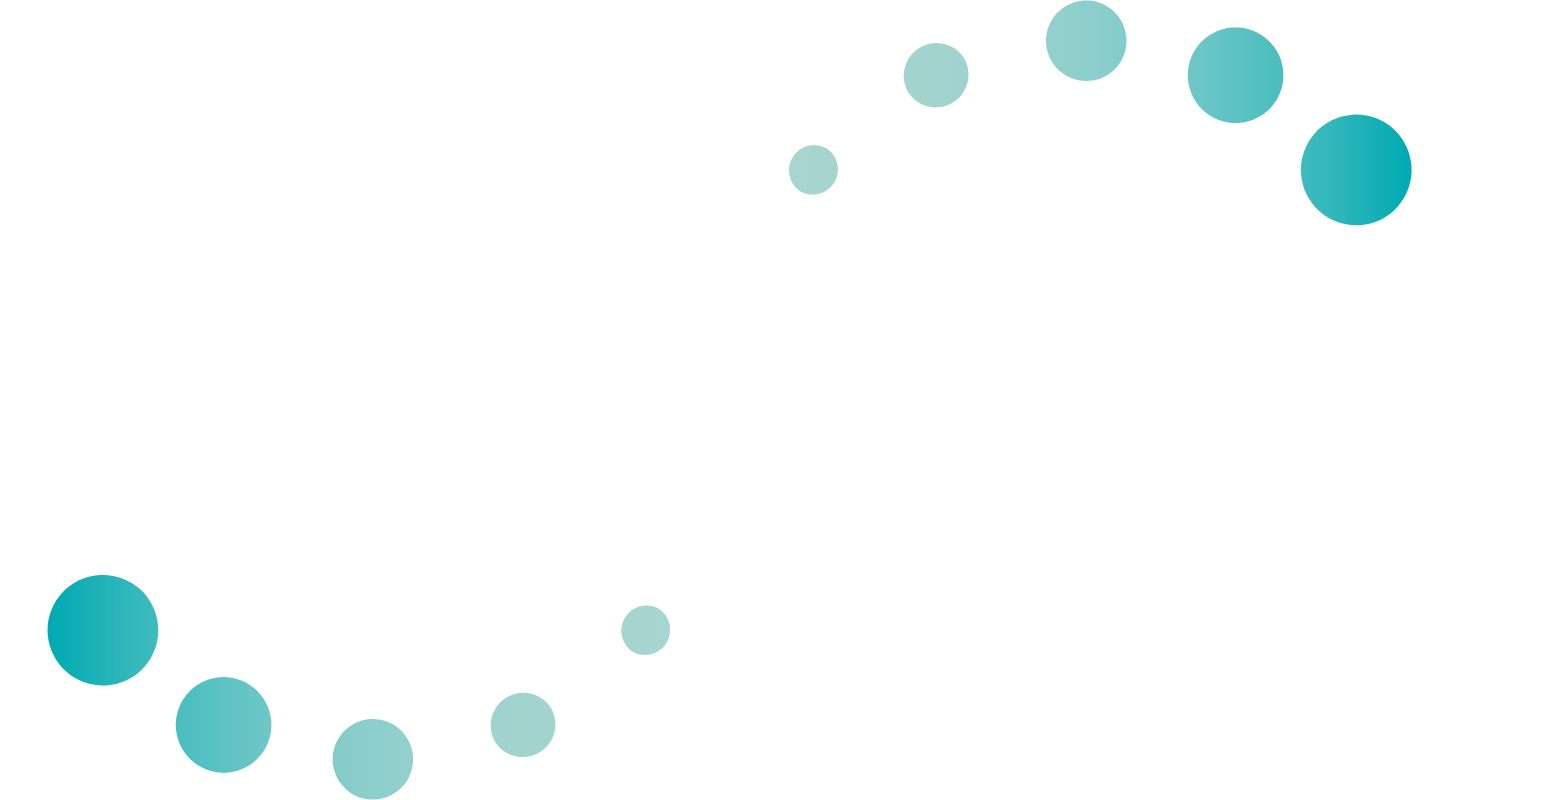 Regulus Therapeutics logo large for dark backgrounds (transparent PNG)